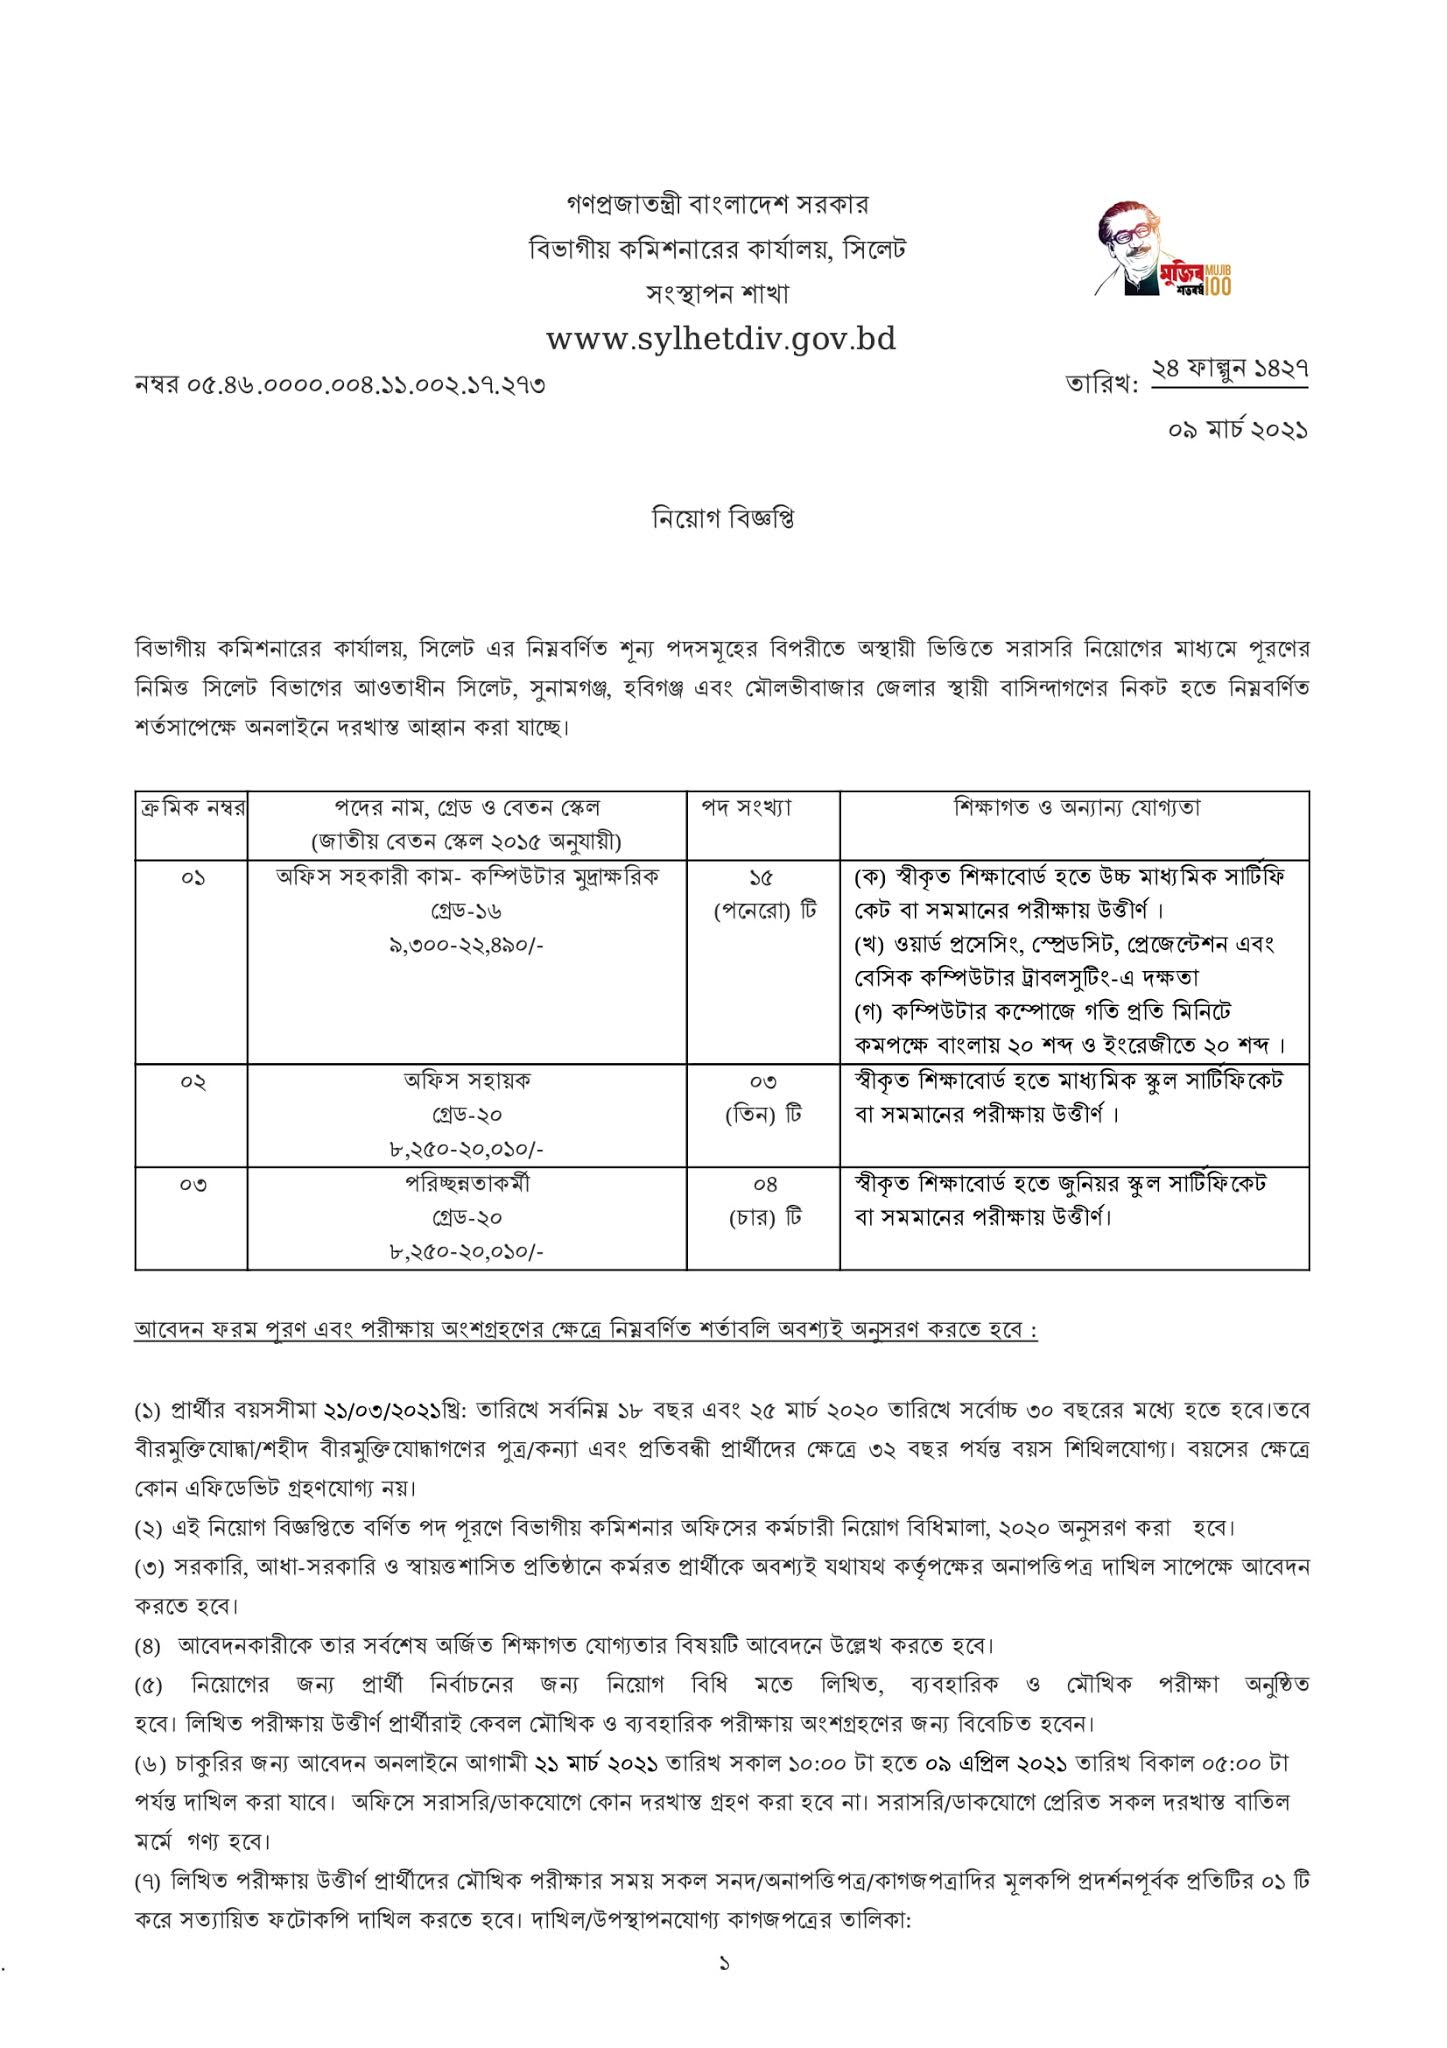 Sylhet Divisional Commissioner’s Office Job Circular 2021